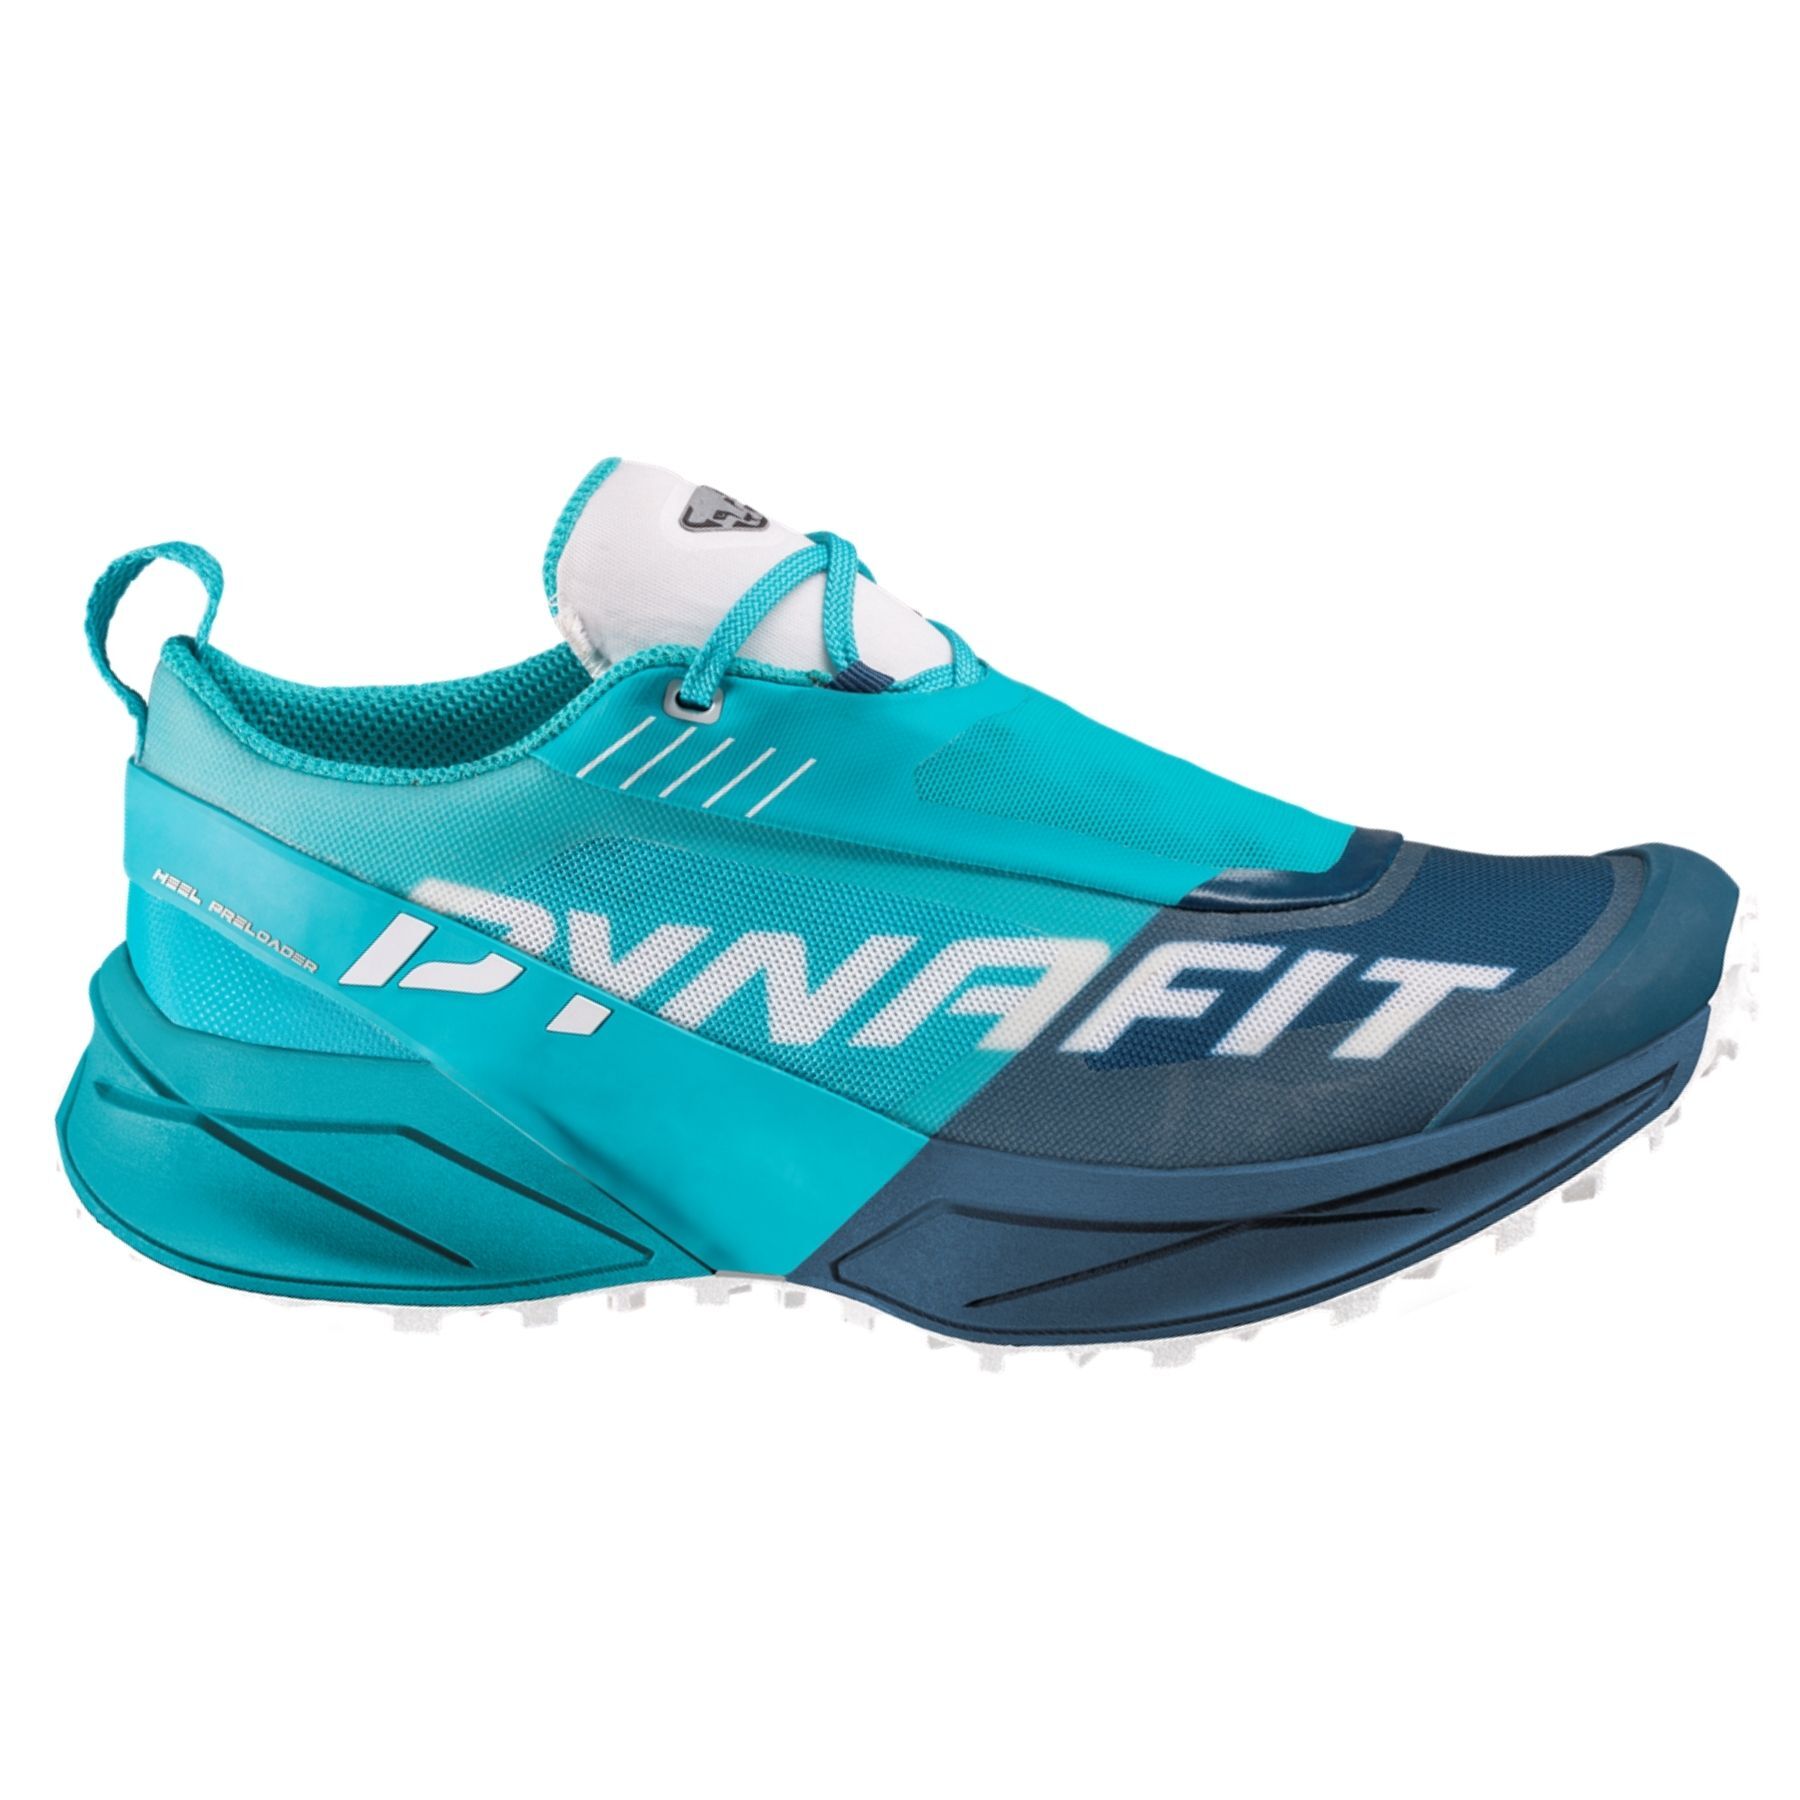 Dynafit Ultra 100 - Trail Running shoes - Women's